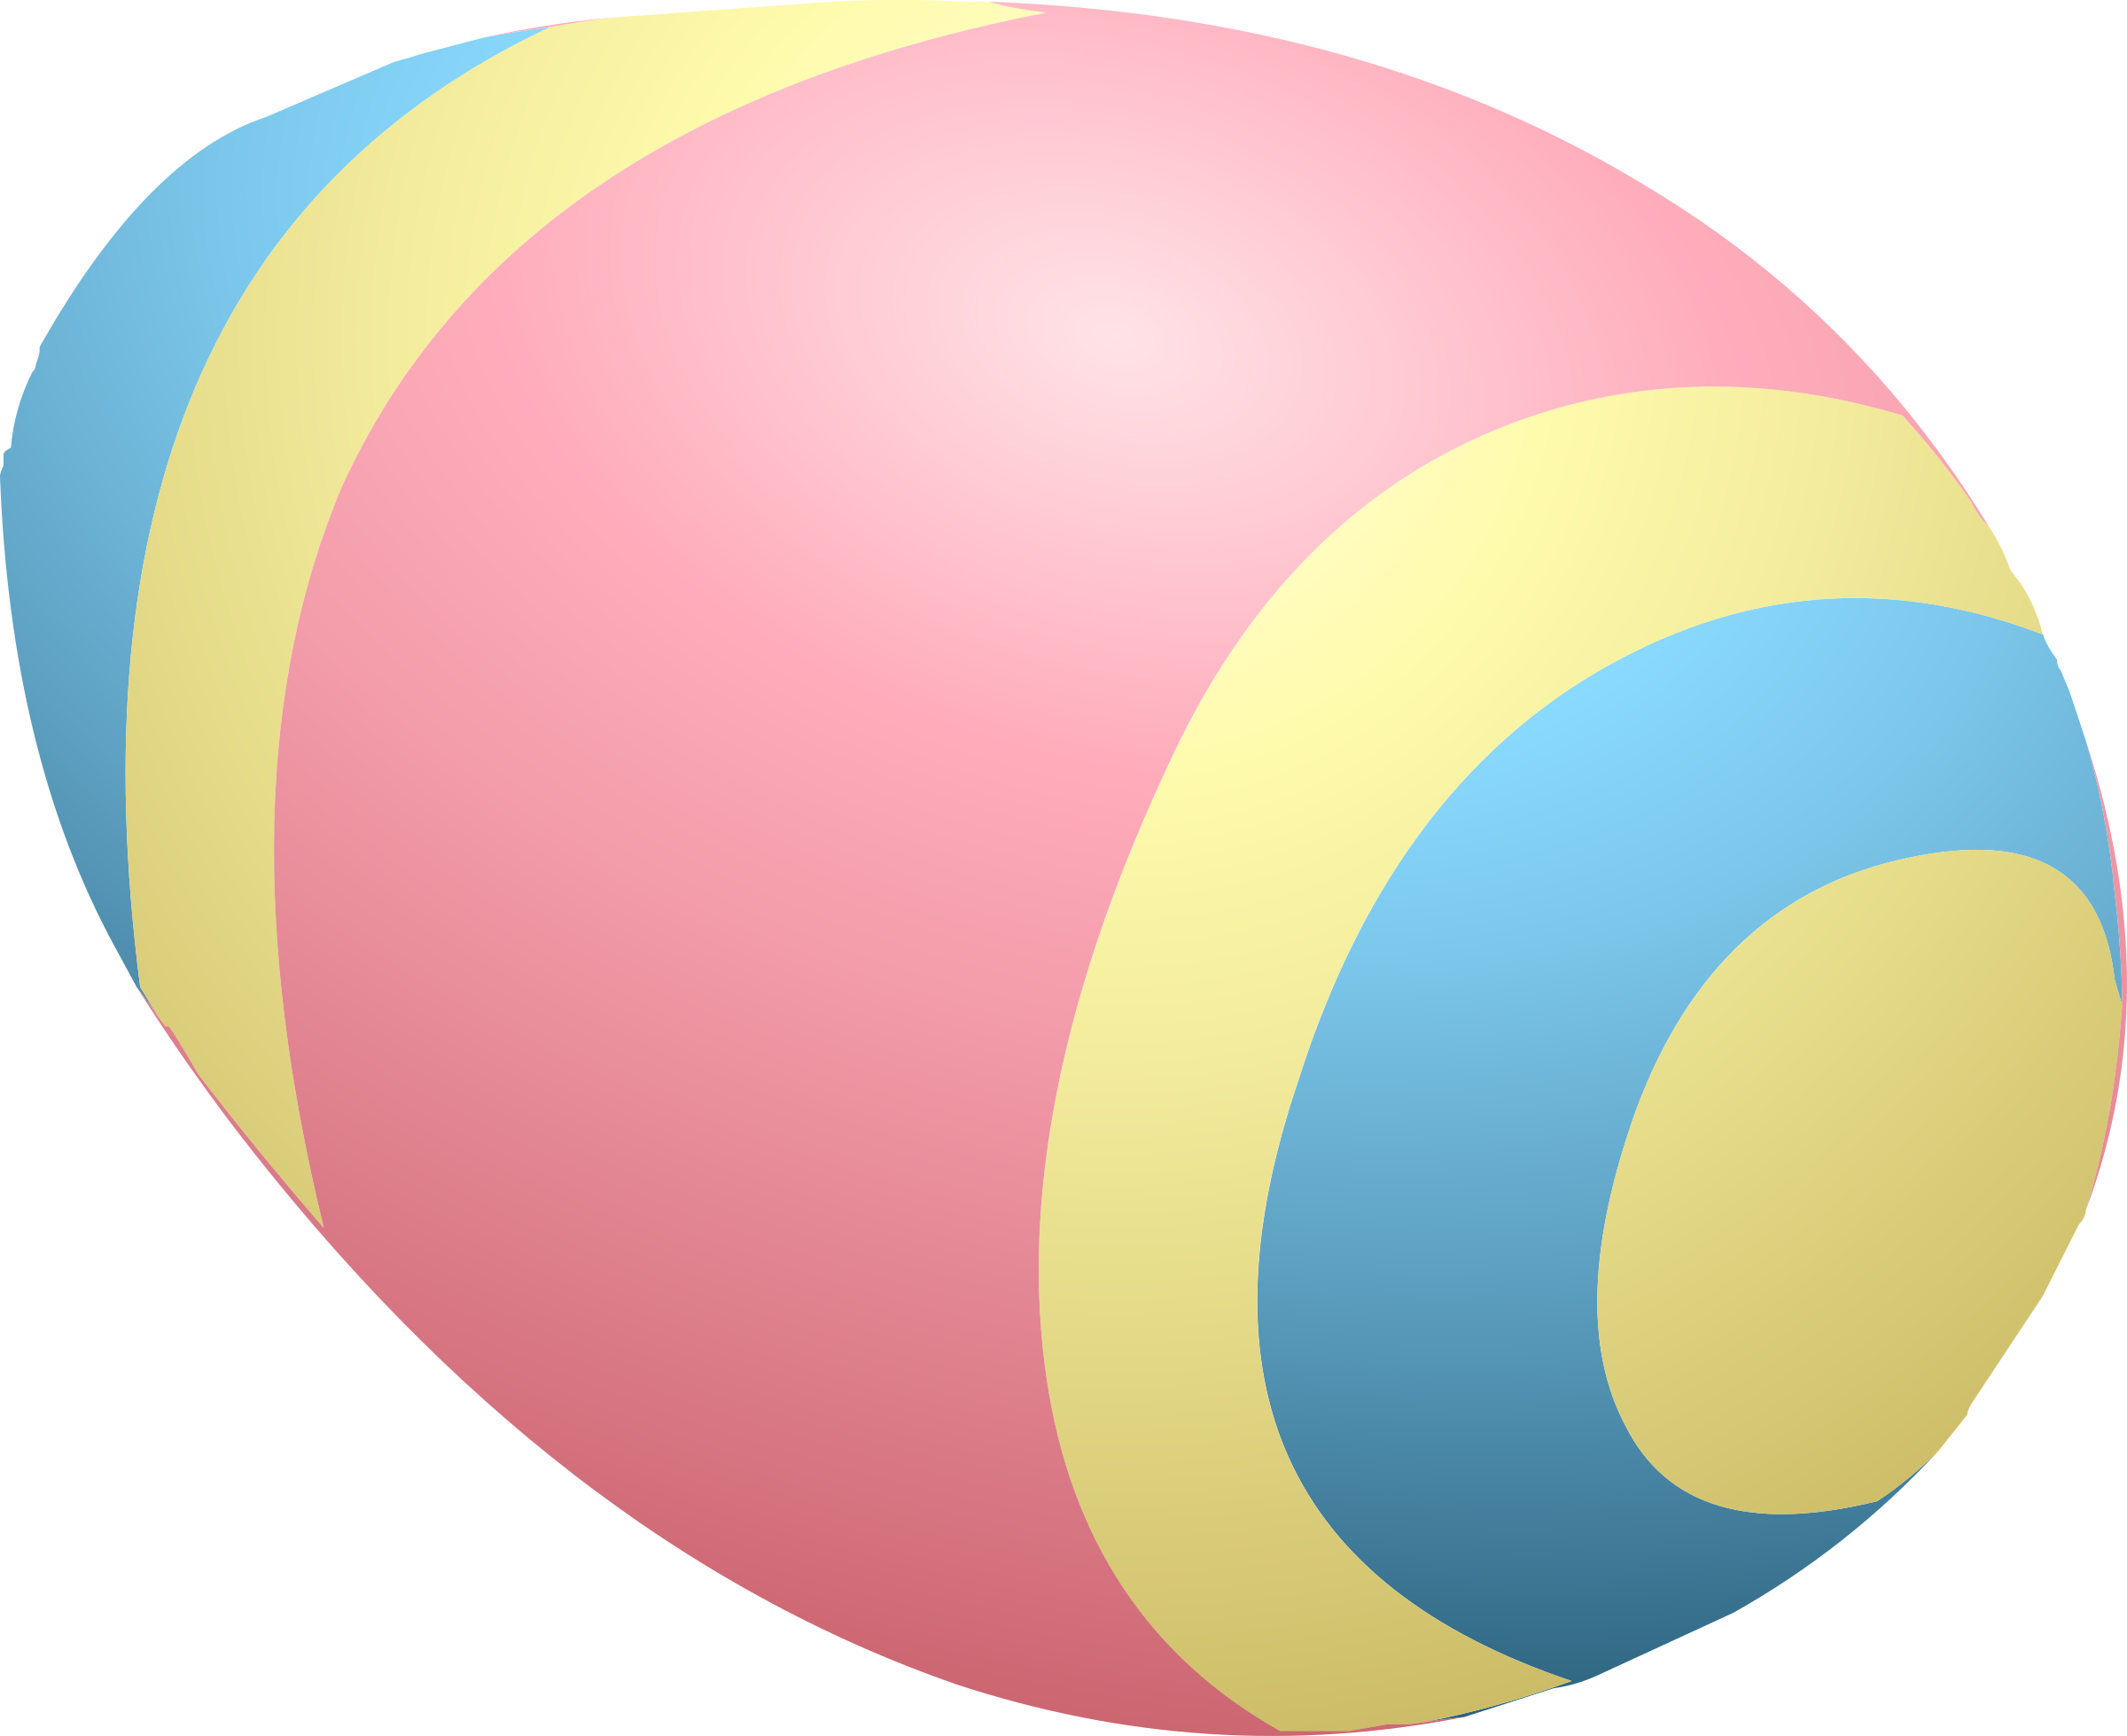 foods clipart ball